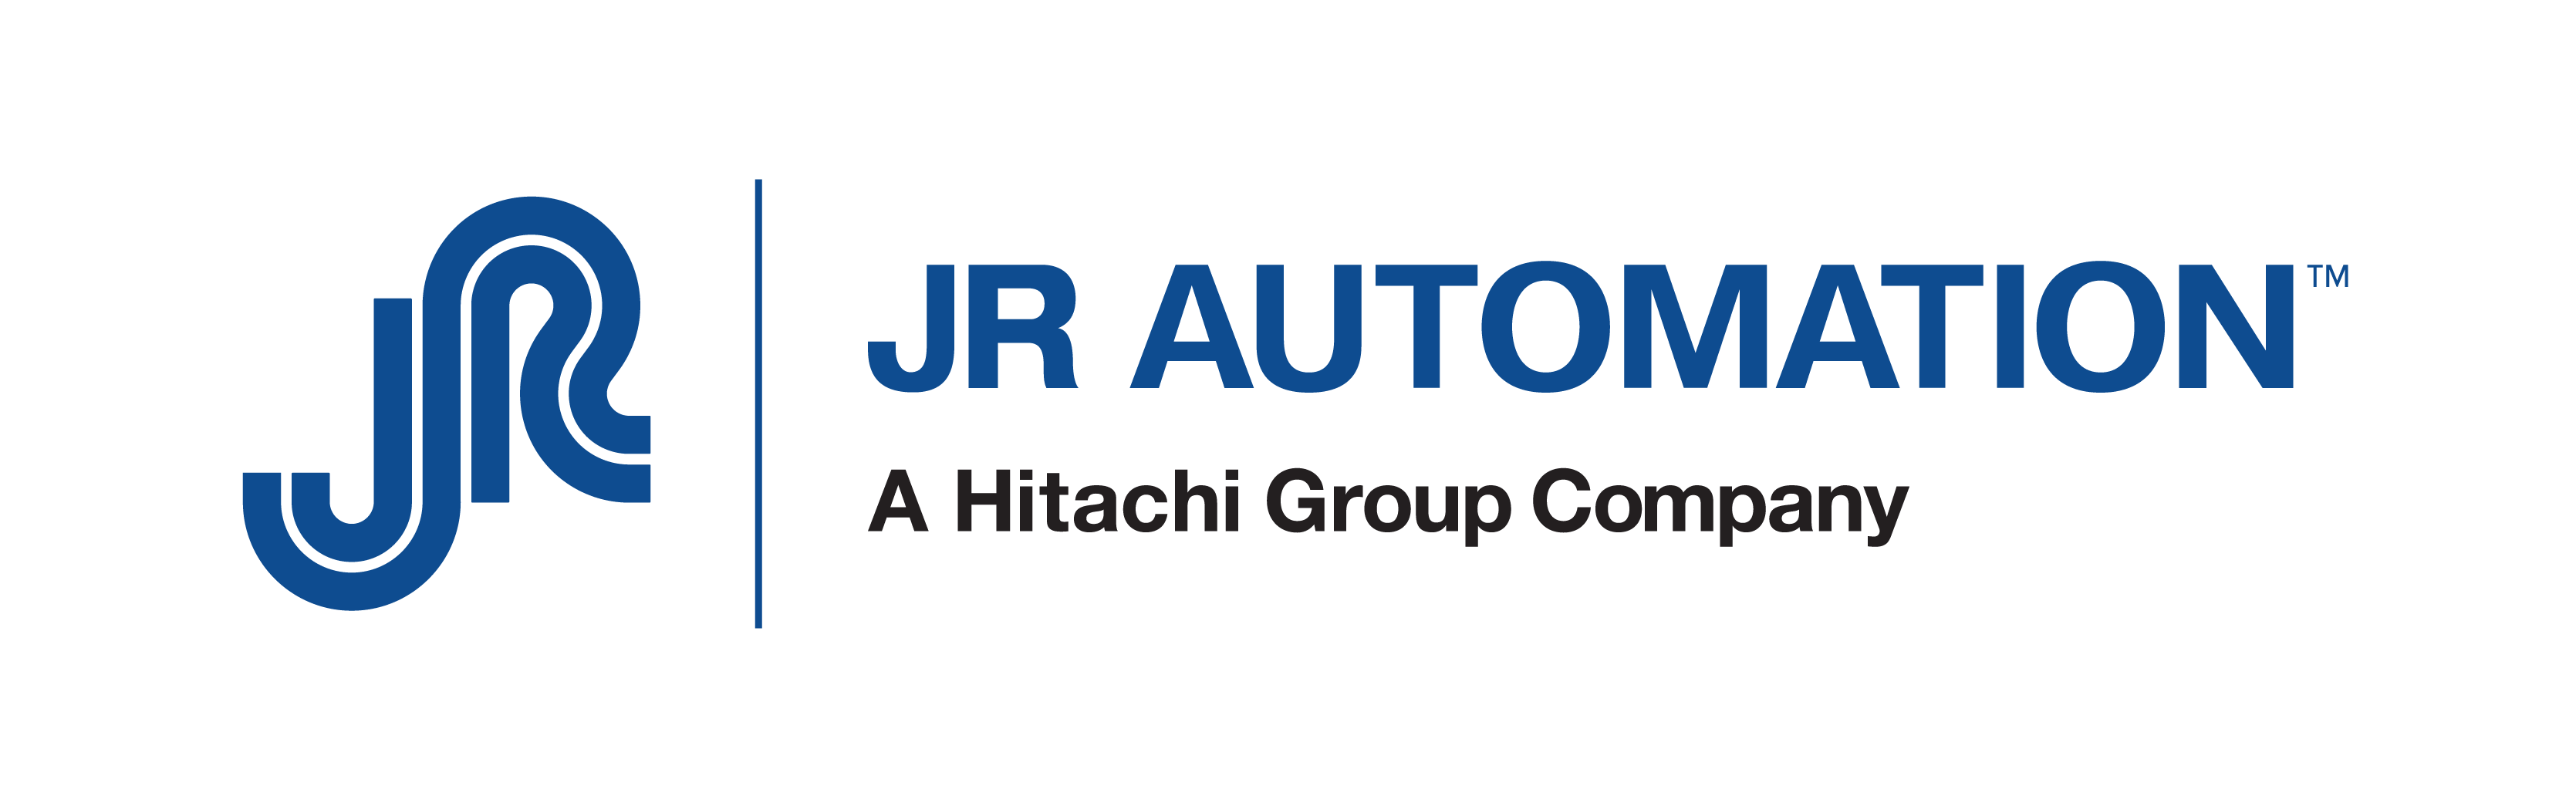 JR-Automation-Logo-Group-Blue